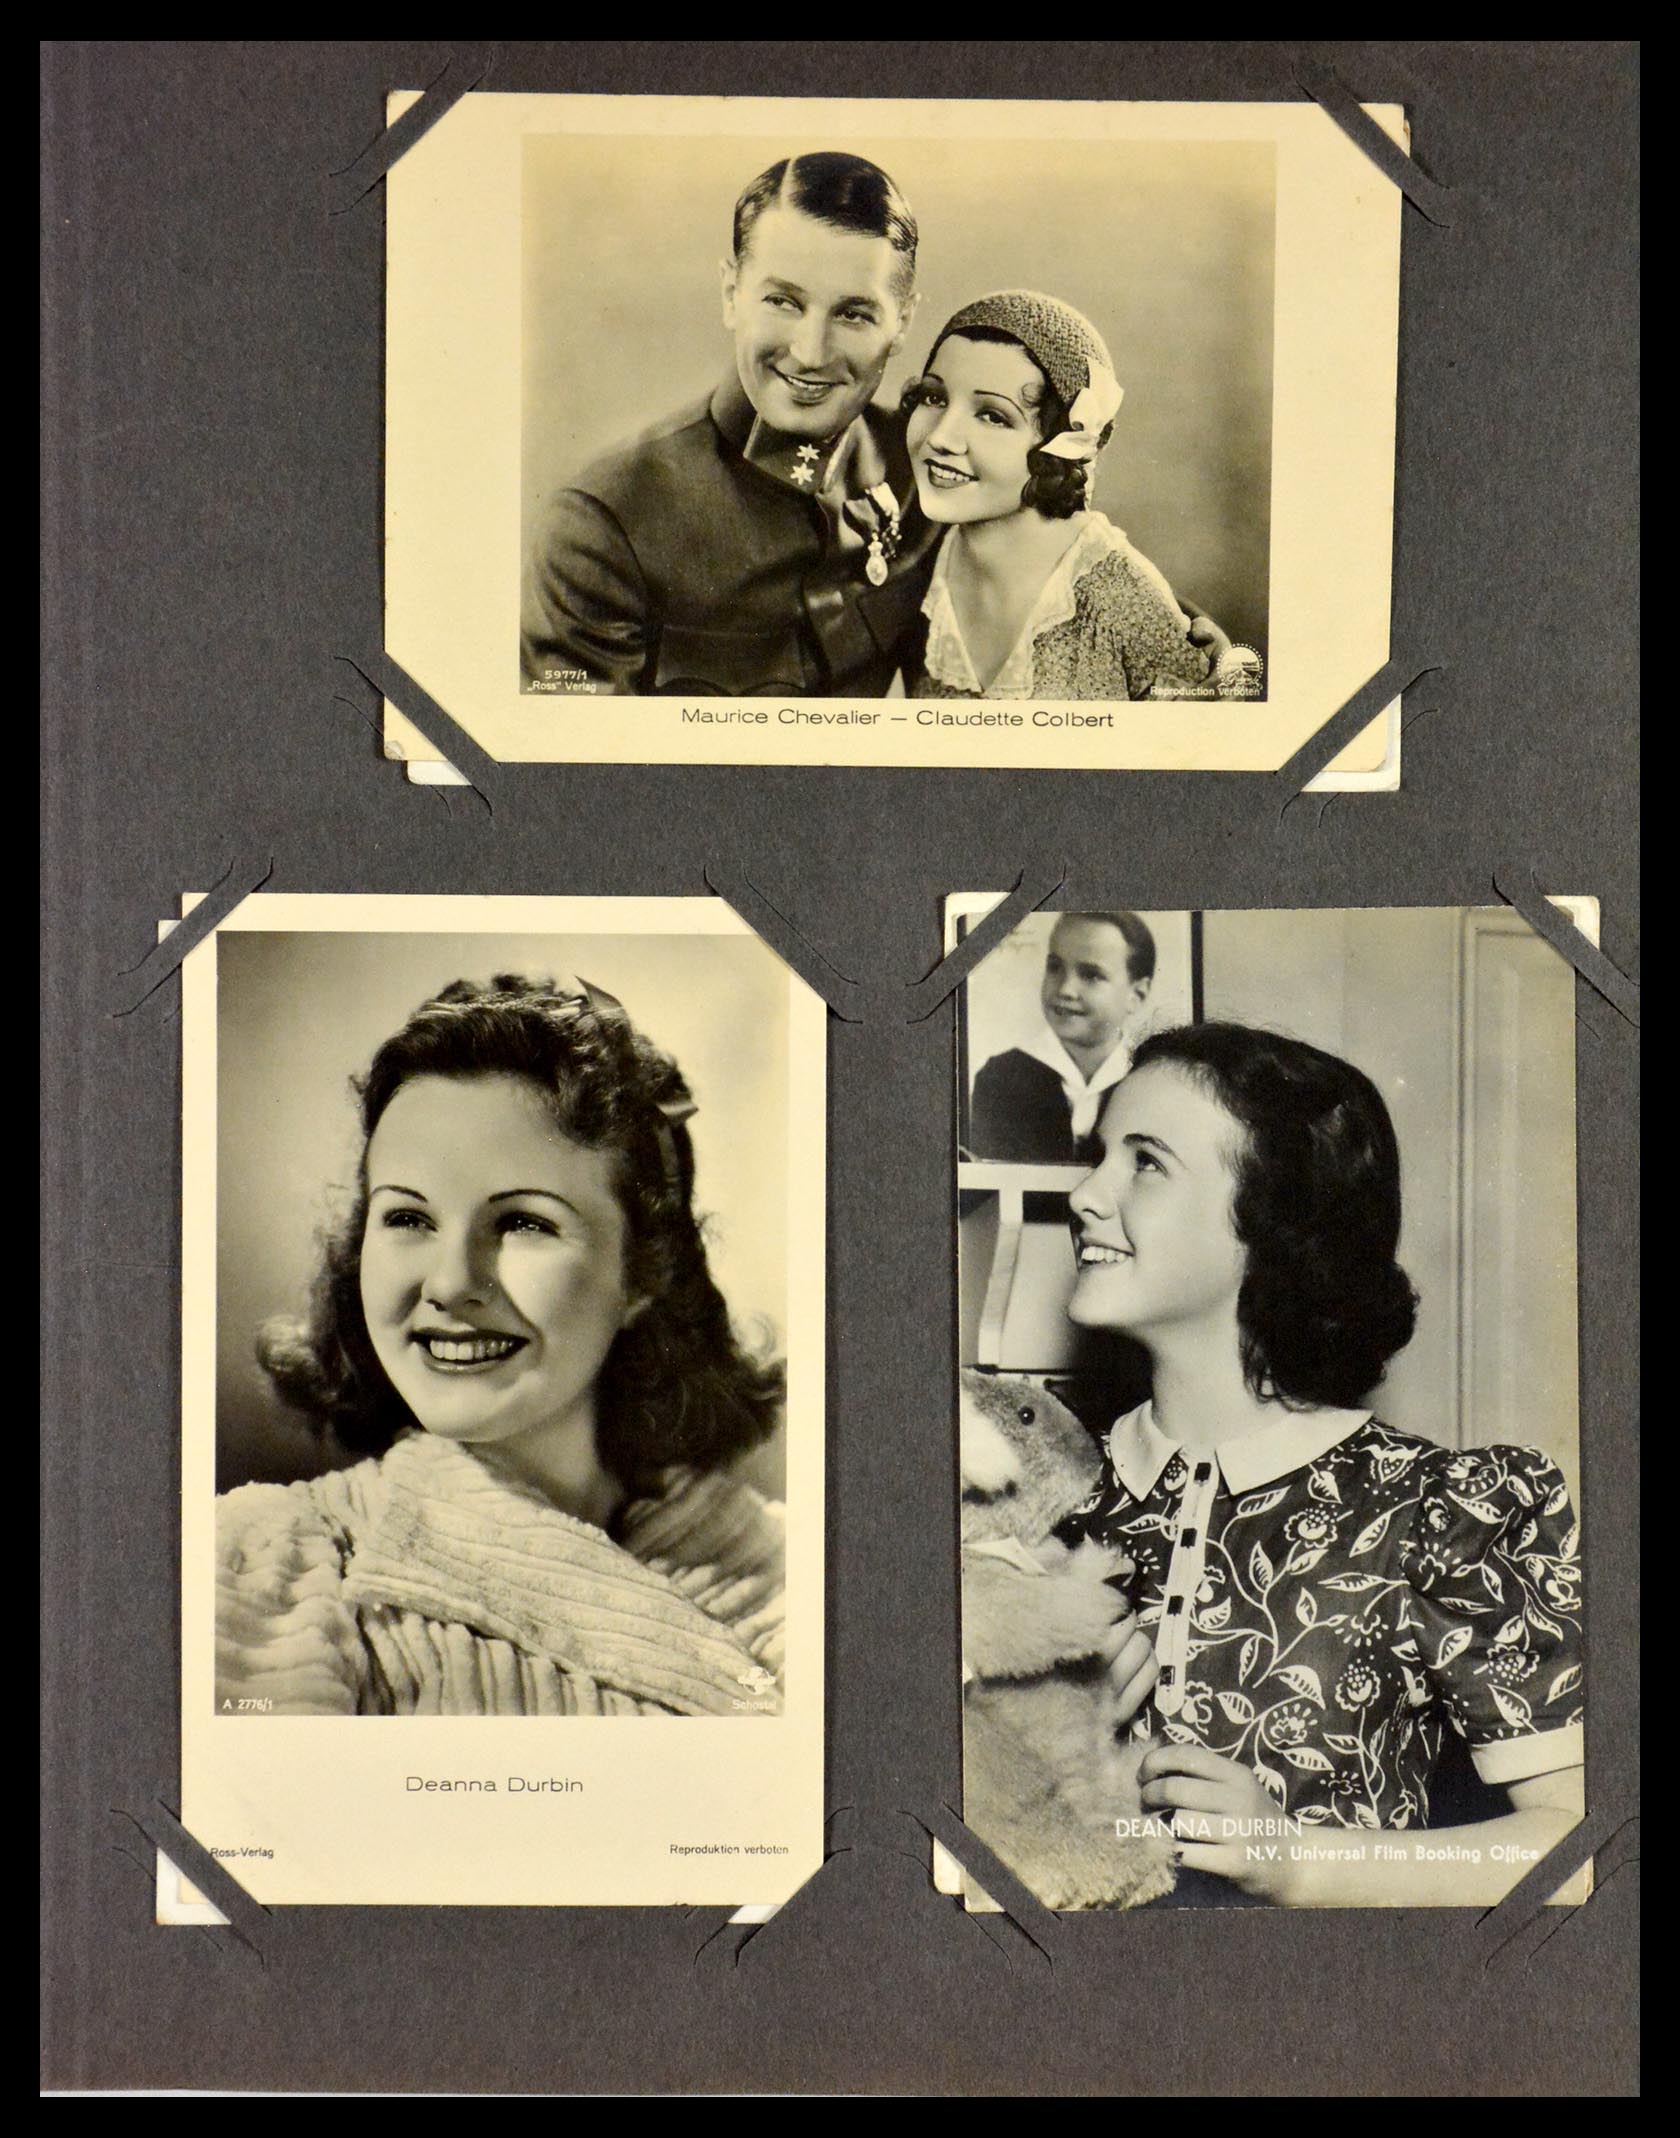 29518 022 - 29518 Netherlands picture postcards 1939-1940.